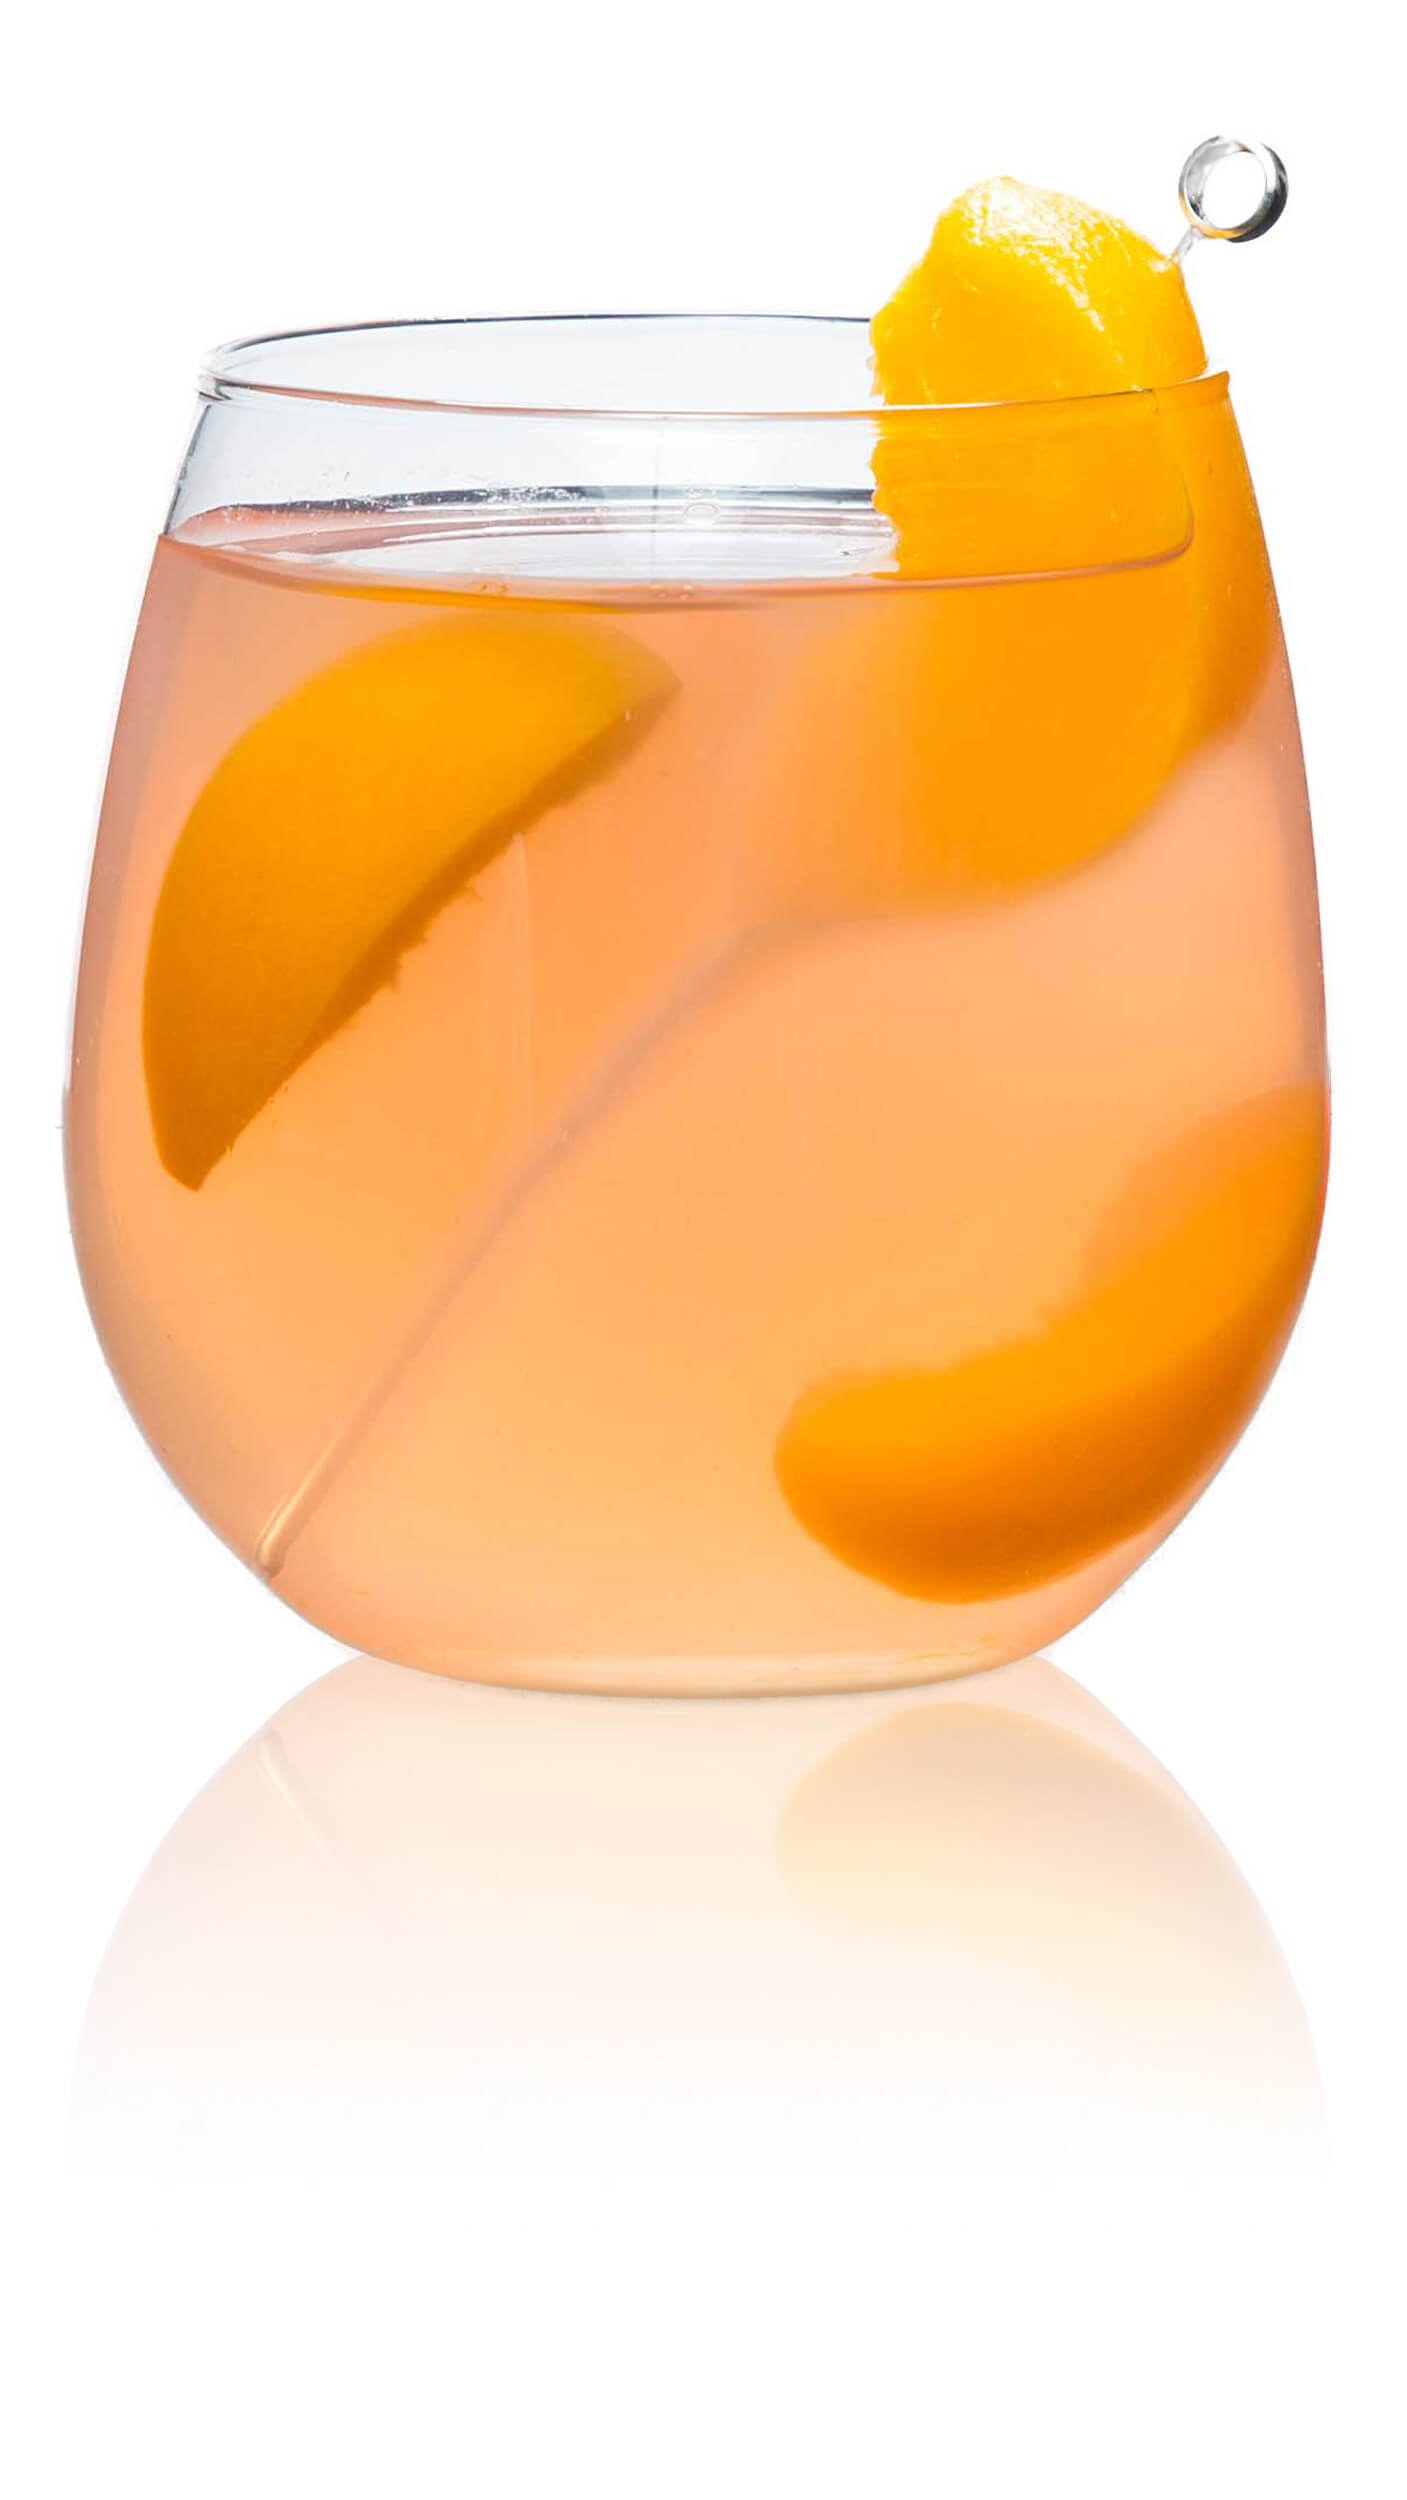 Vodka peach schnapps: EFFEN Original and DeKuyper Peach Schnapps, fresh sour and watermelon syrup.